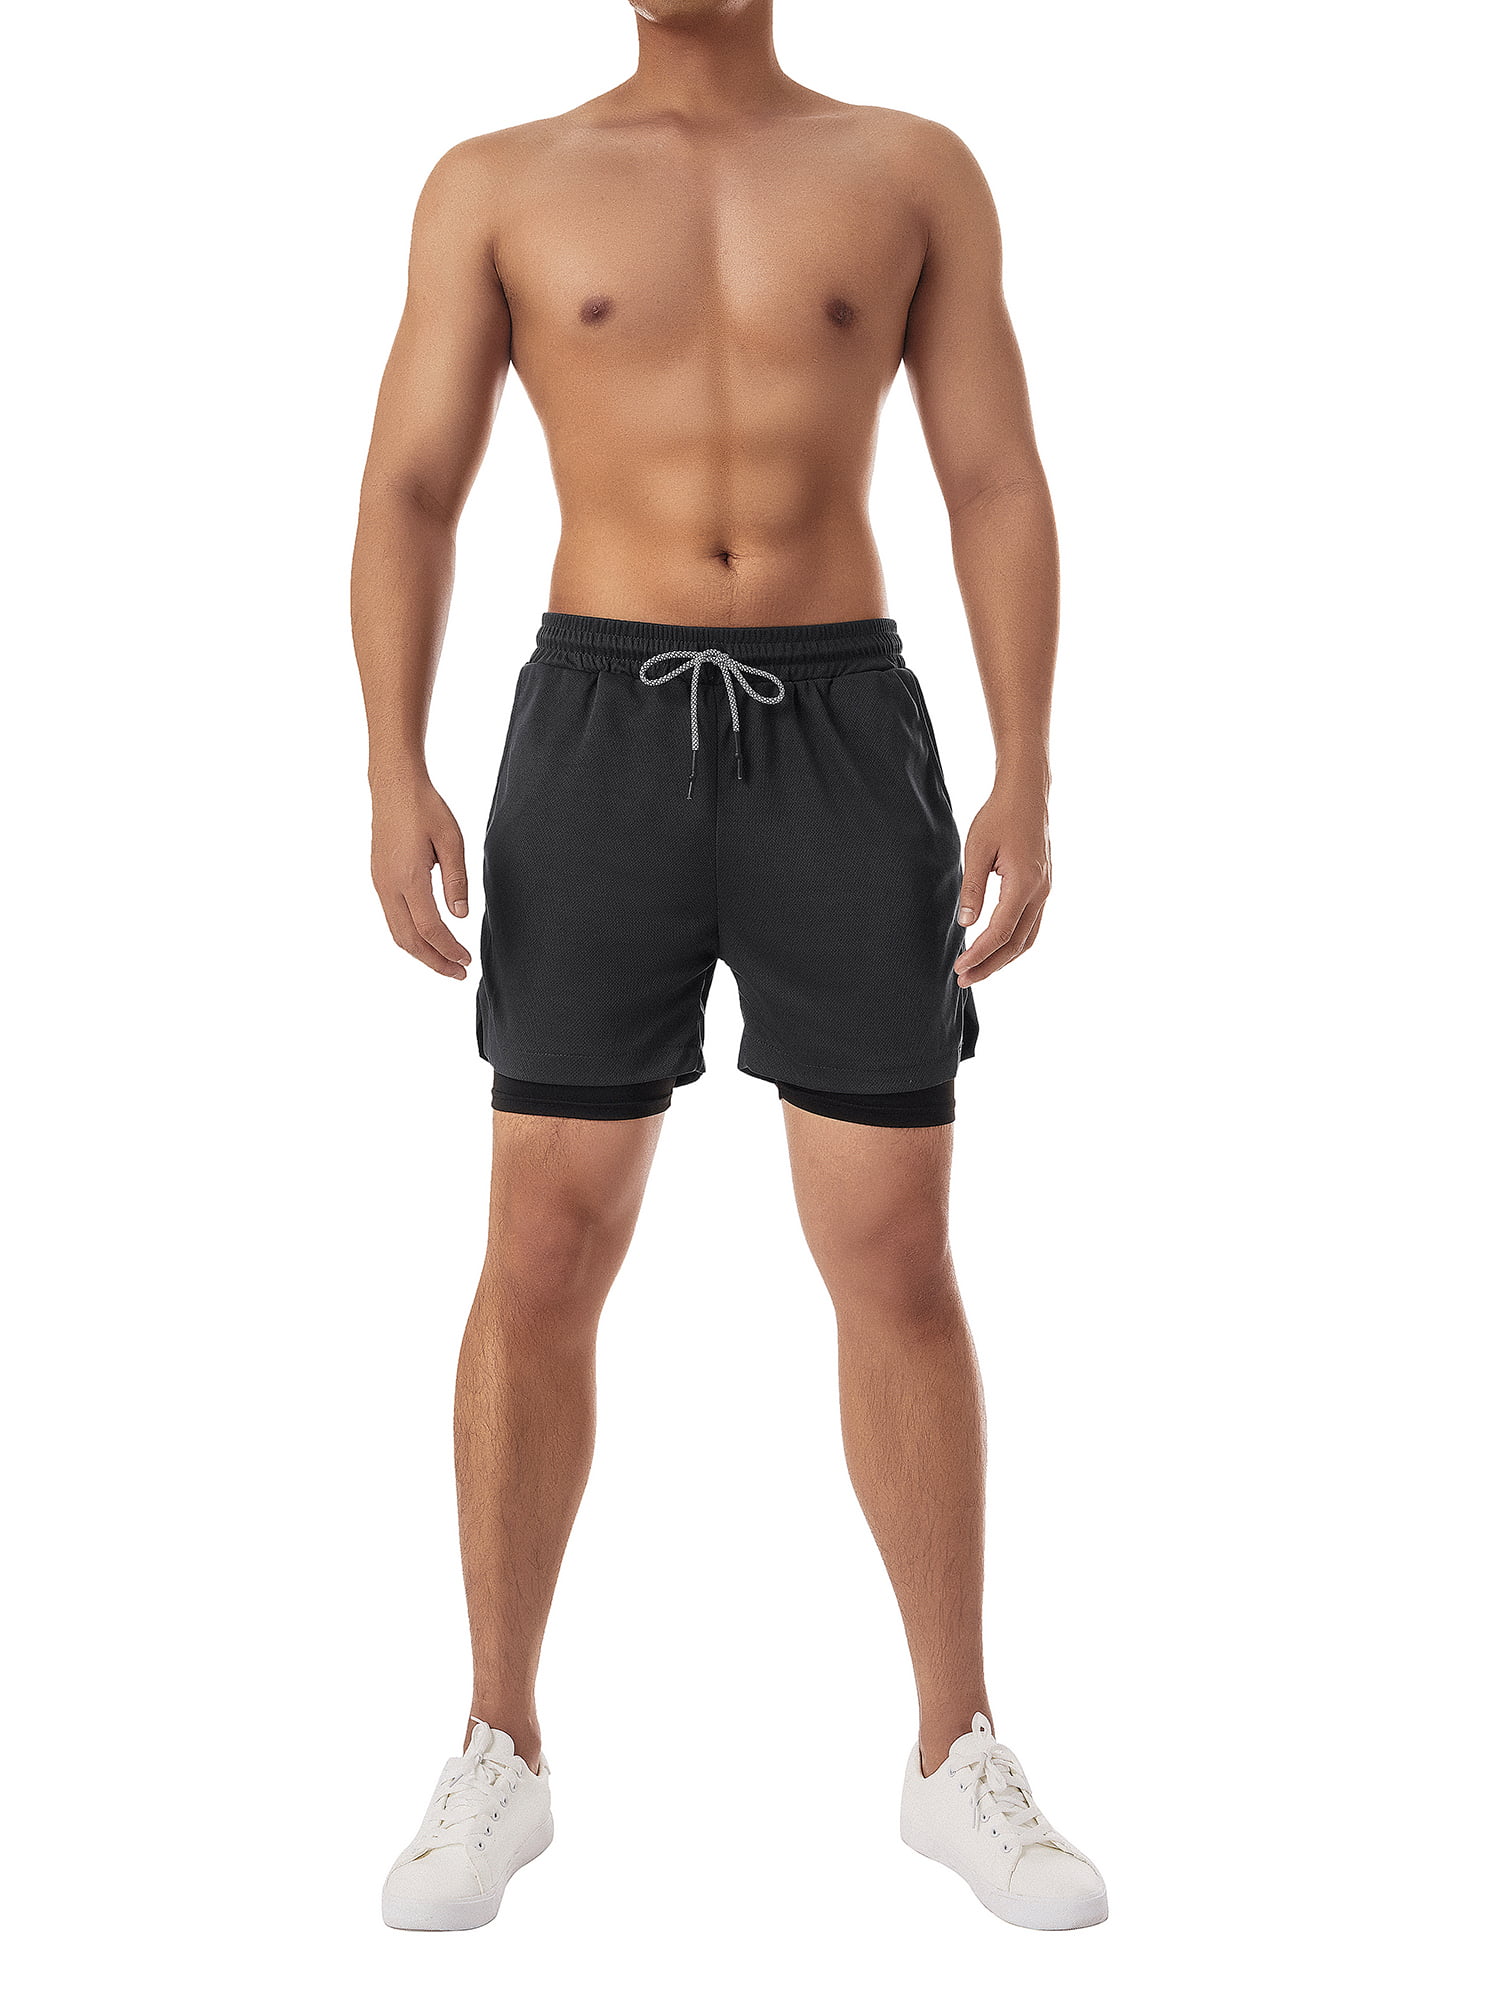 Summer Sports Trousers Men's Elastic Running Fitness Sweatpants